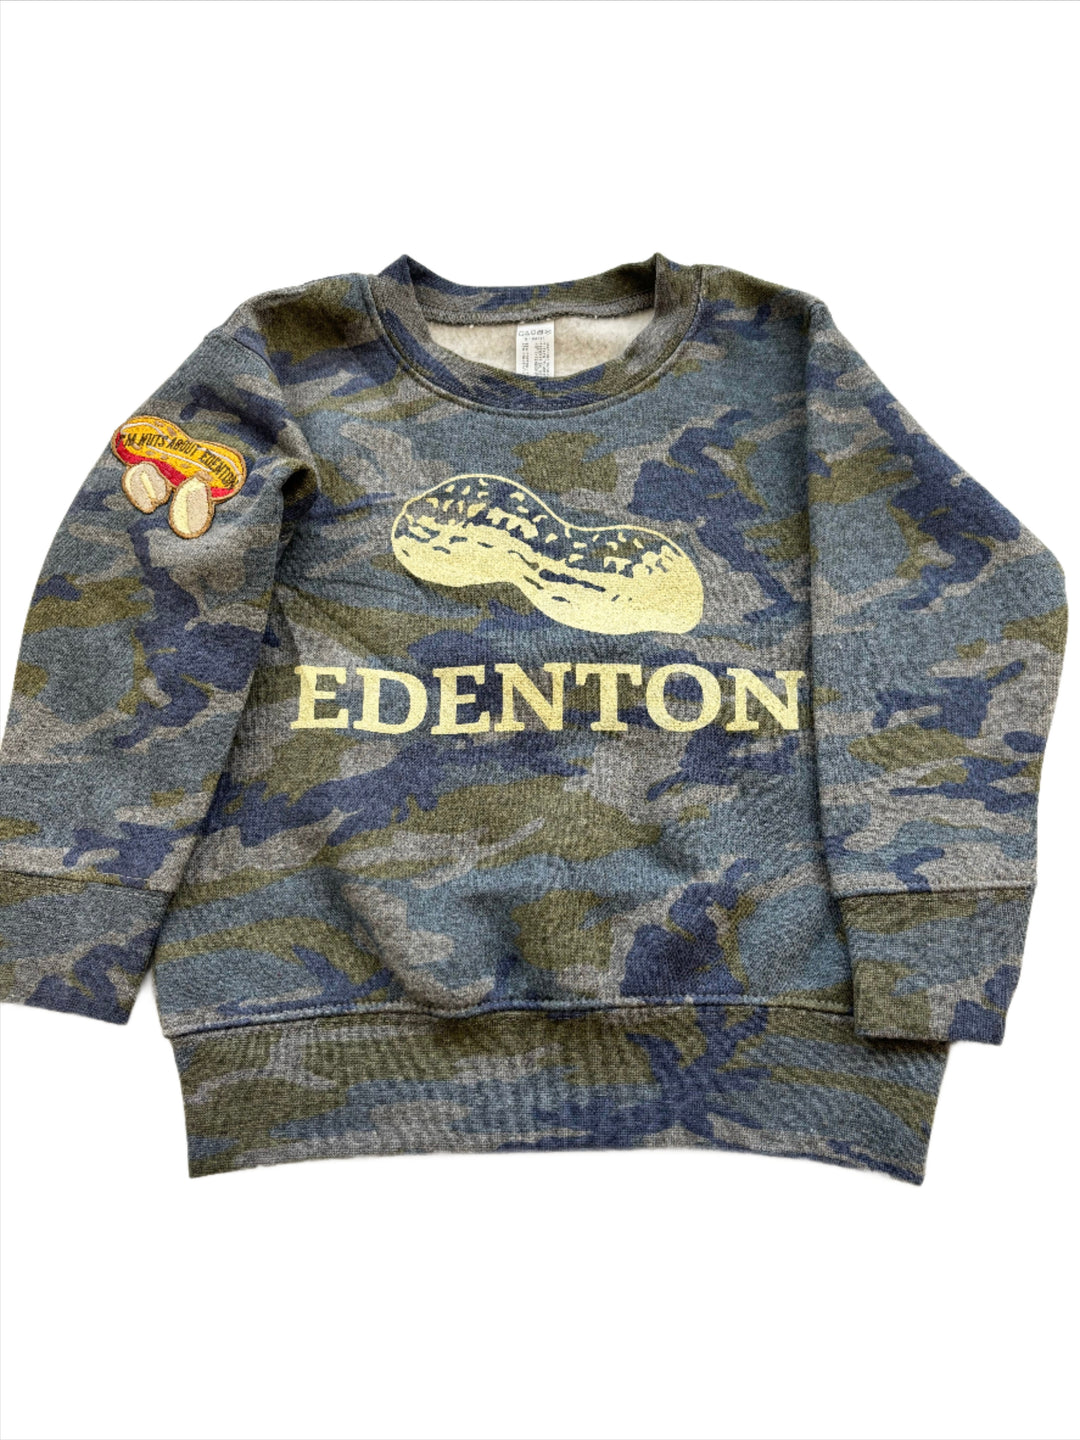 Edenton Peanut Kid Crewneck Sweatshirt, Vintage Camo